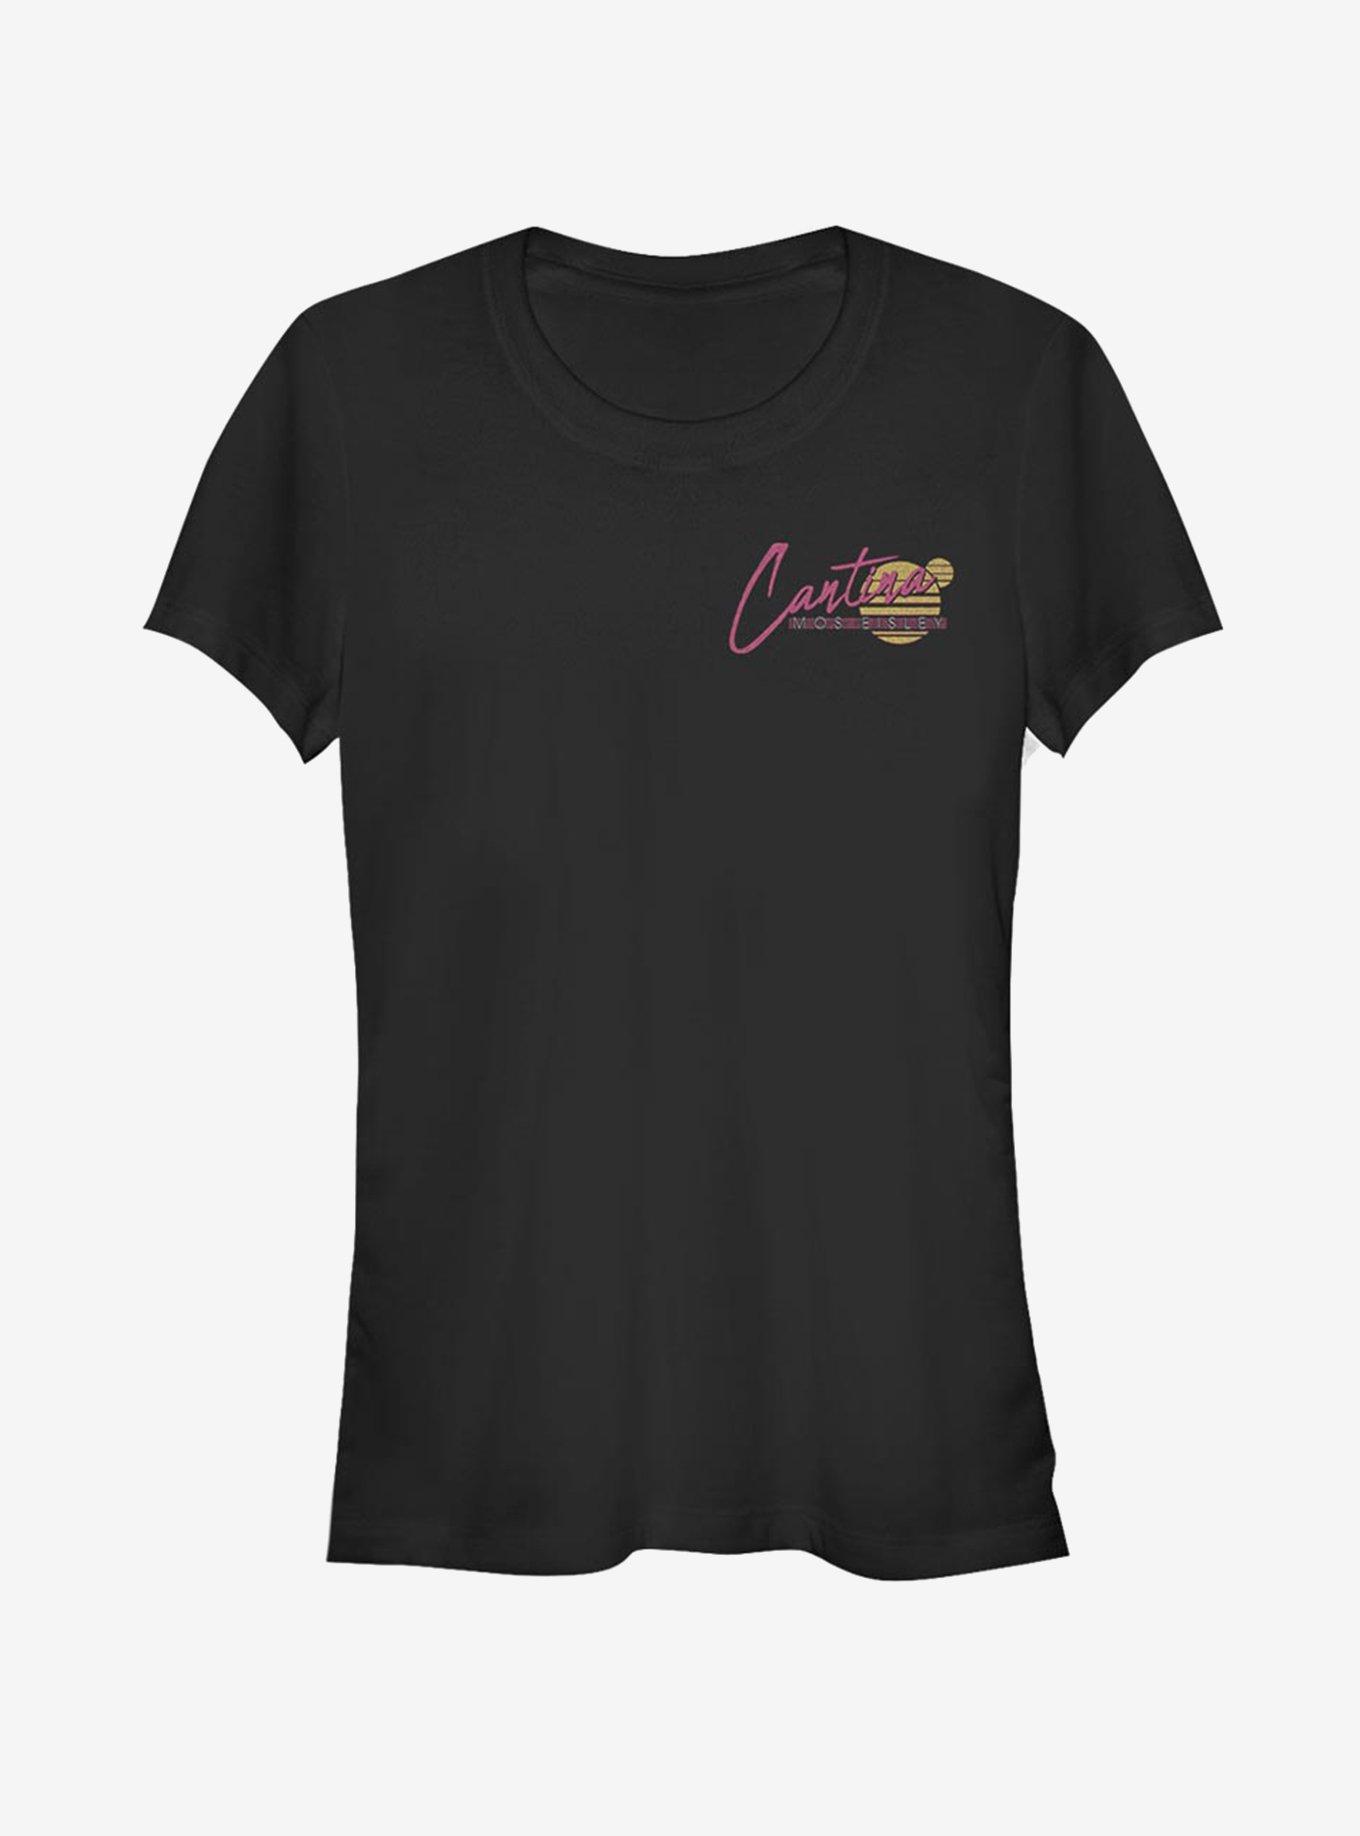 Star Wars Cantina Miami Text Girls T-Shirt